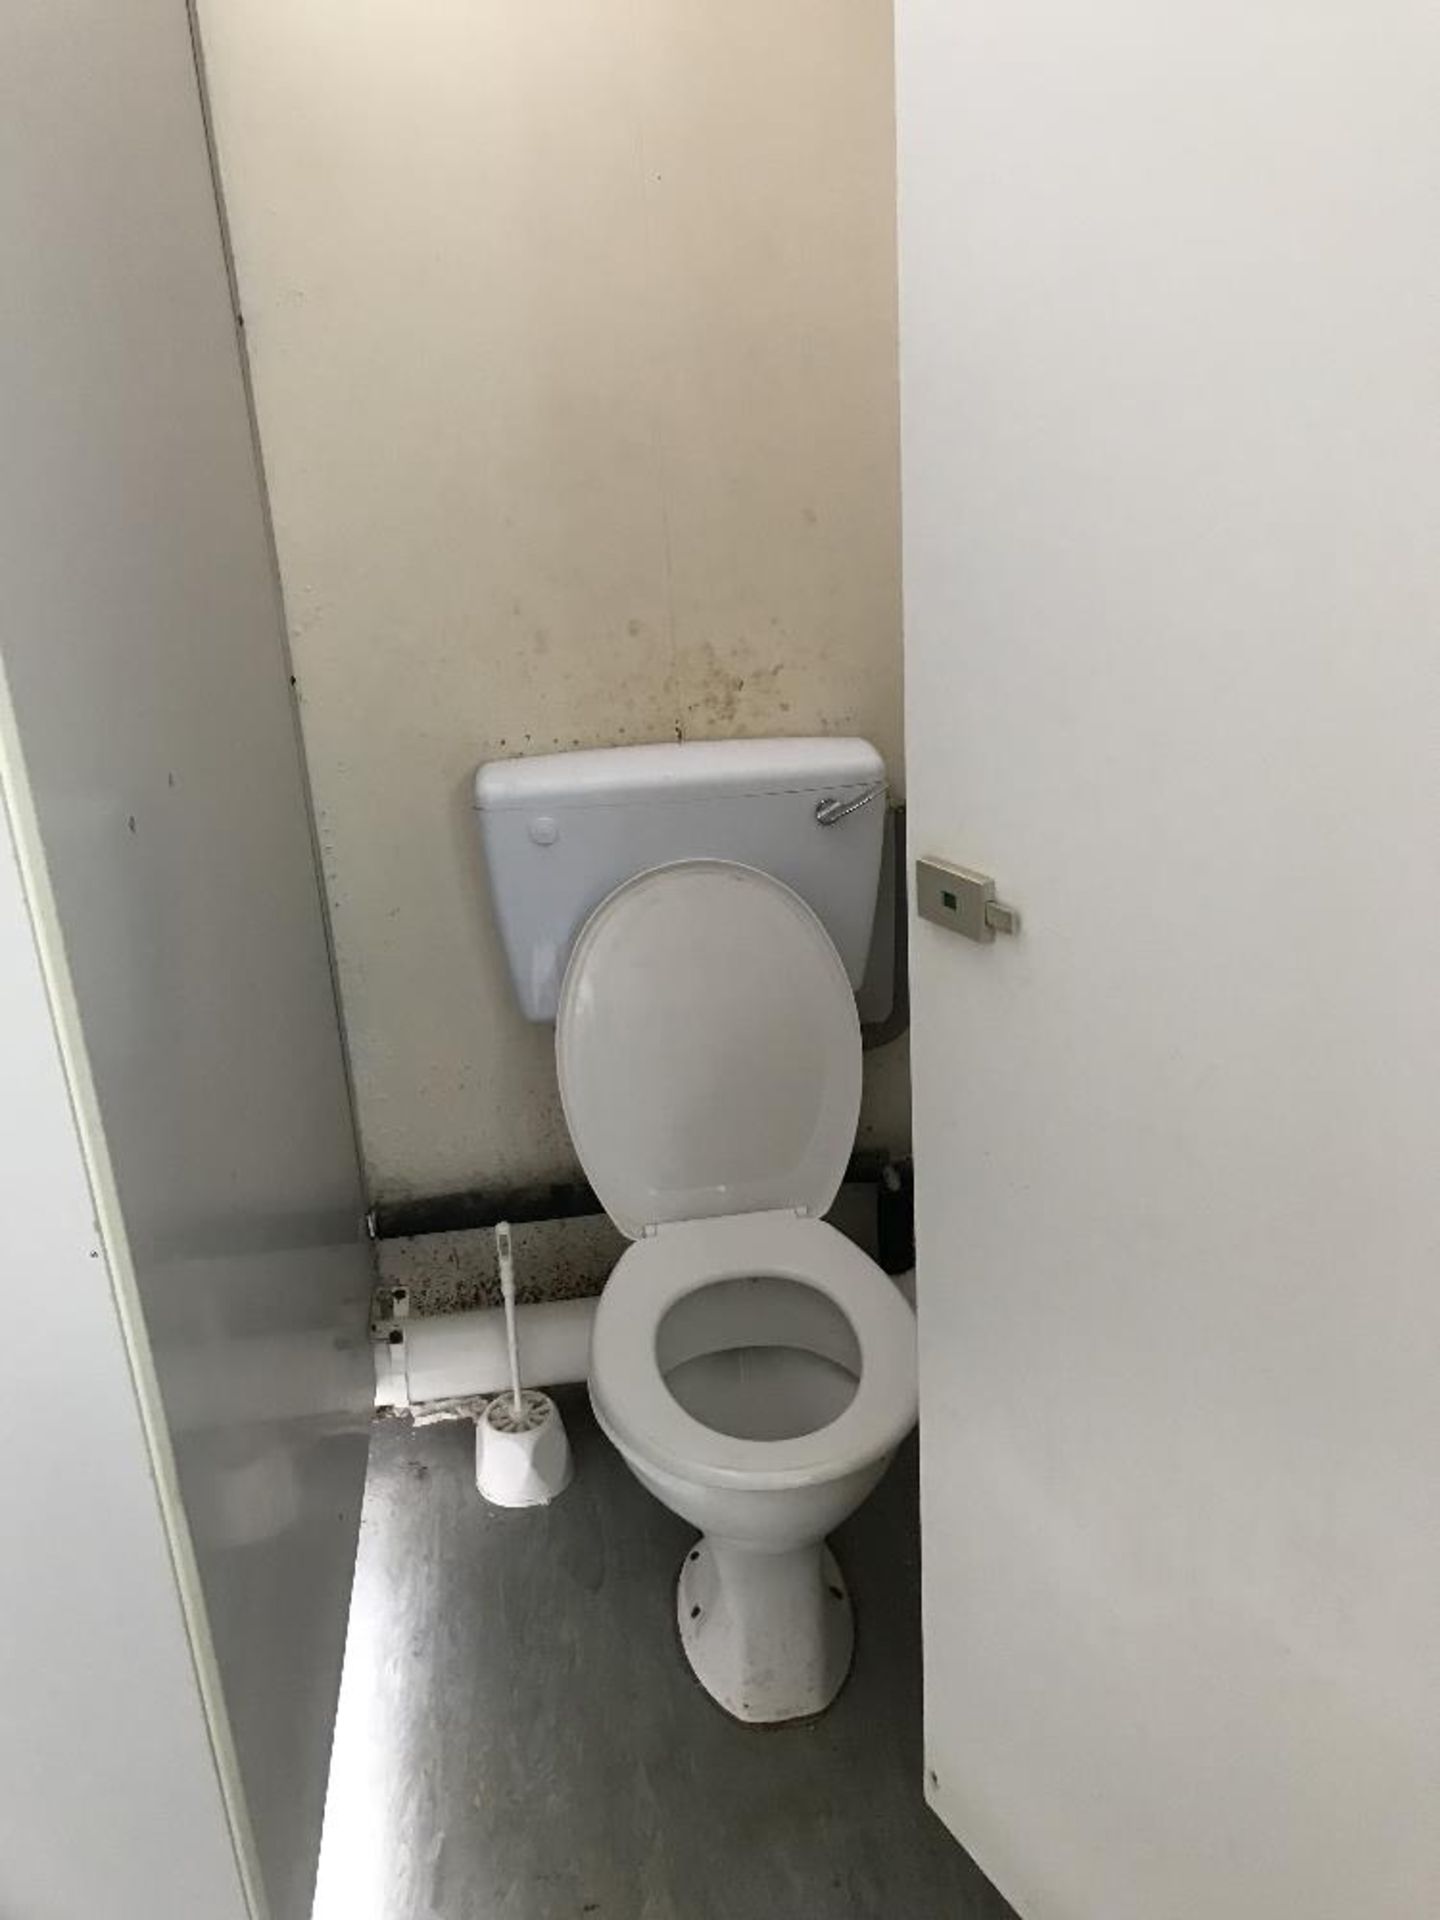 Portacabin jack legged staff toilet unit - Image 9 of 12